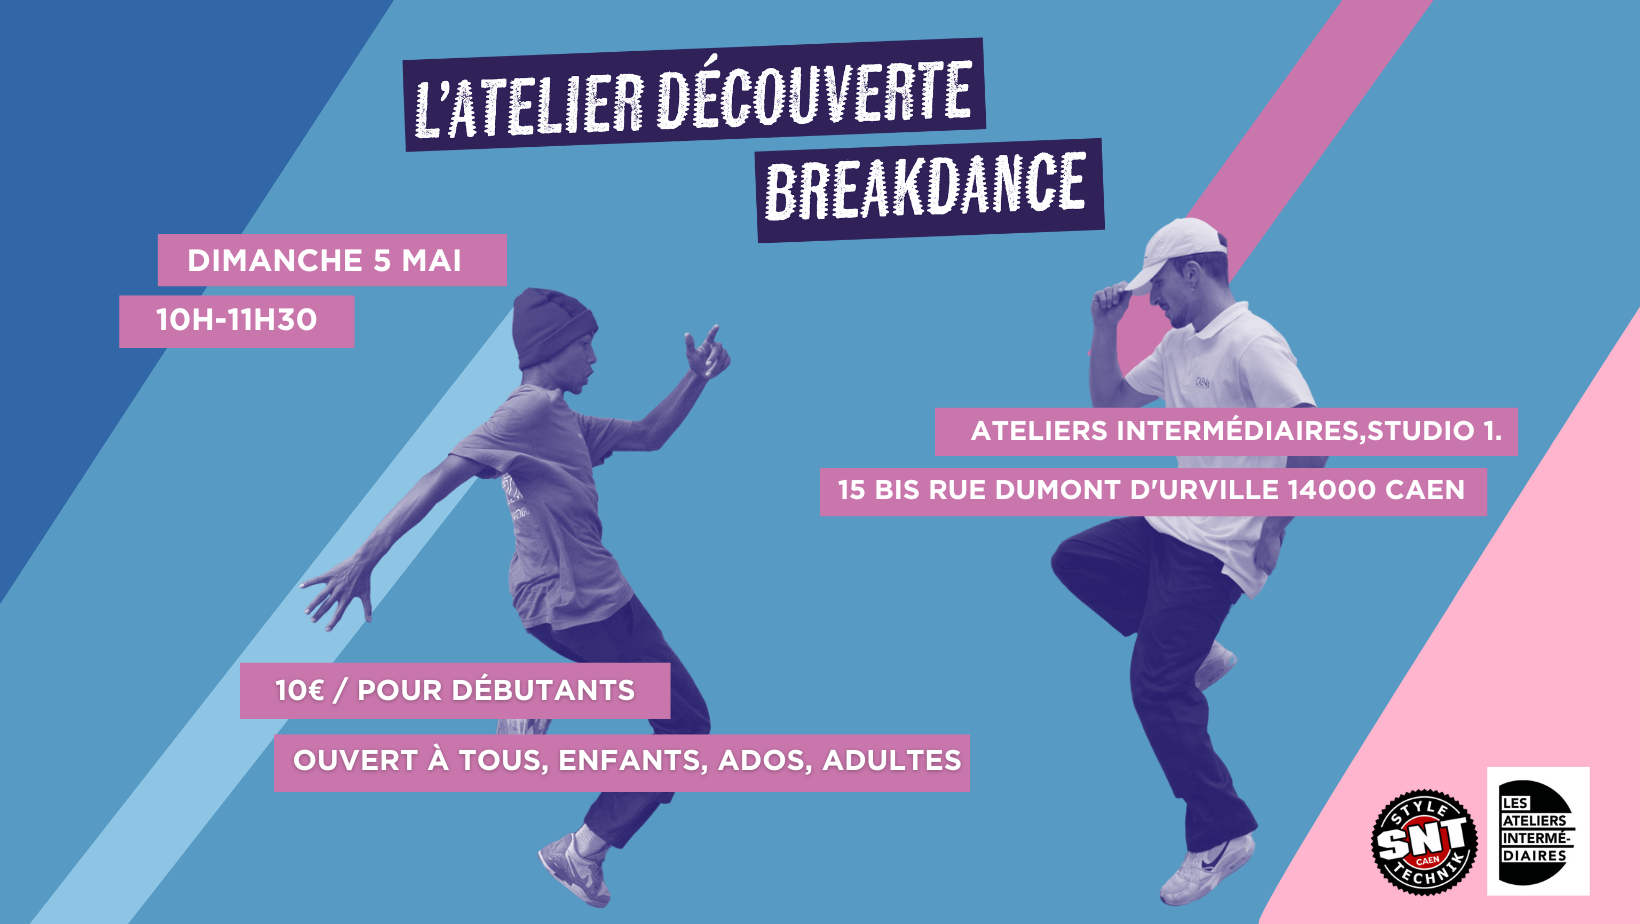 Atelier Decouverte breakdance